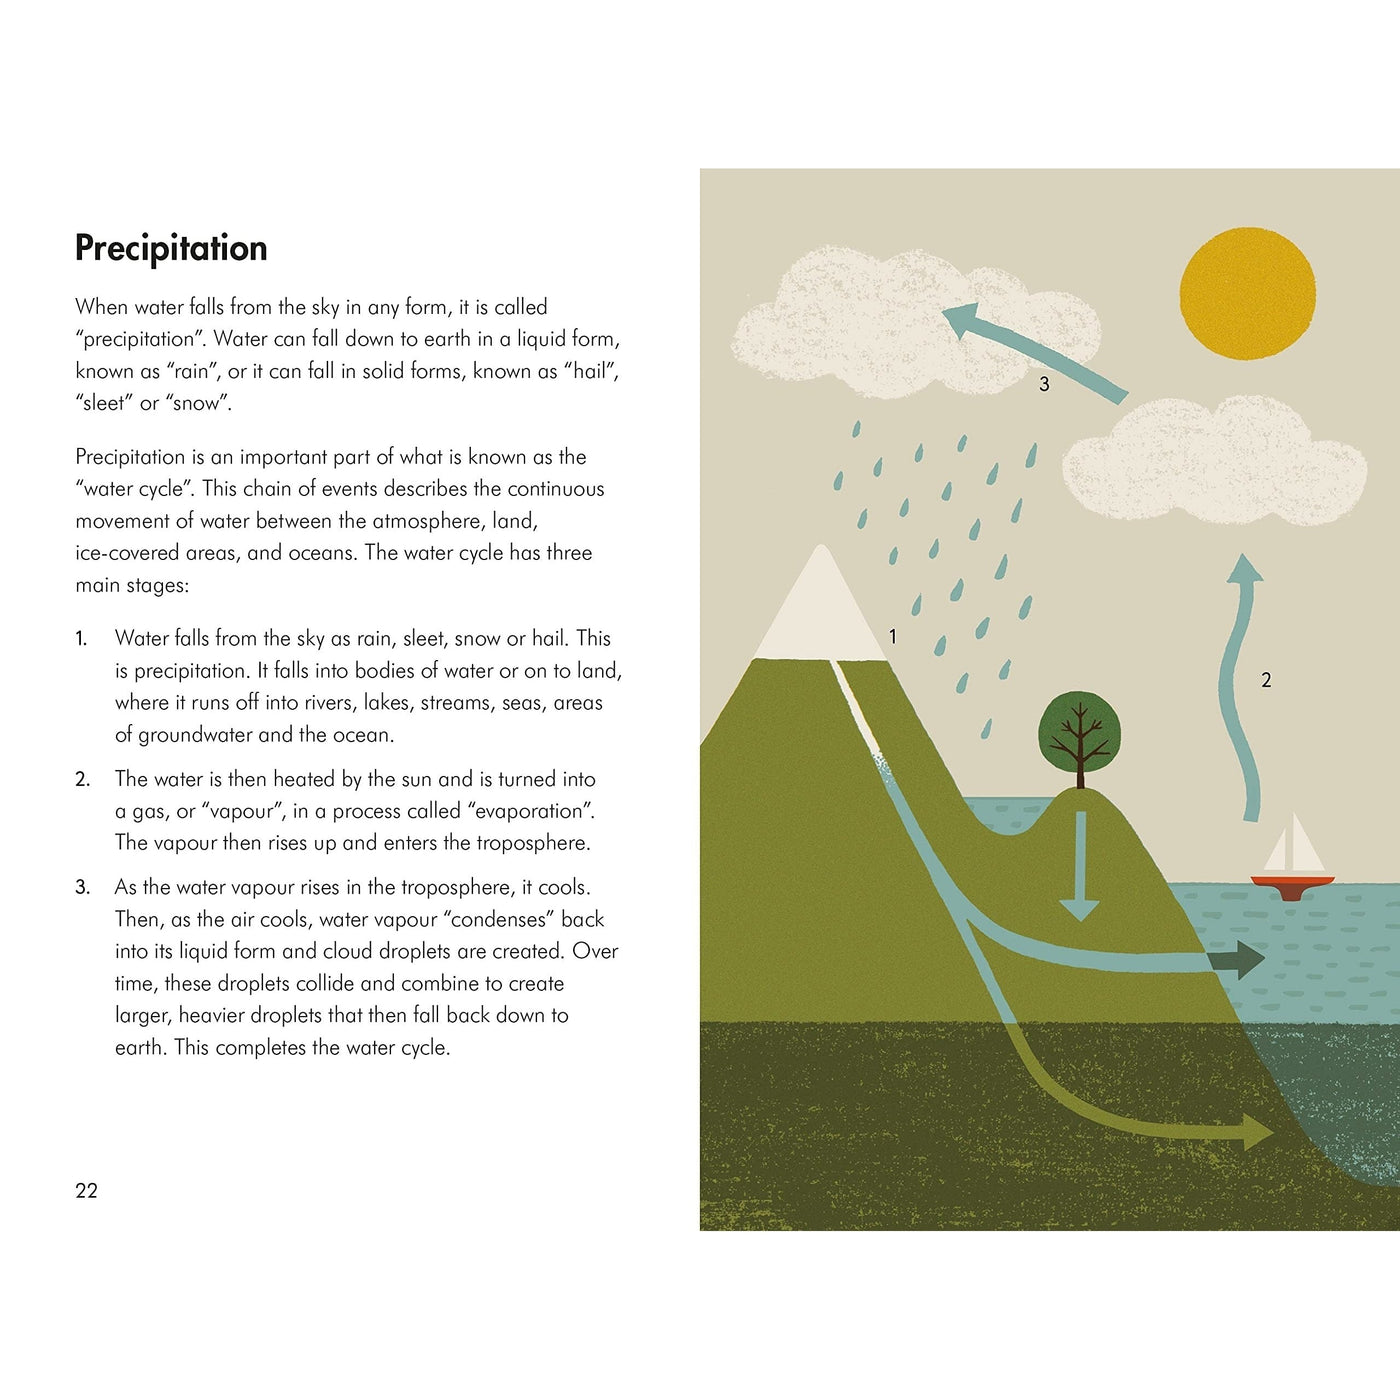 A Ladybird Book: Weather